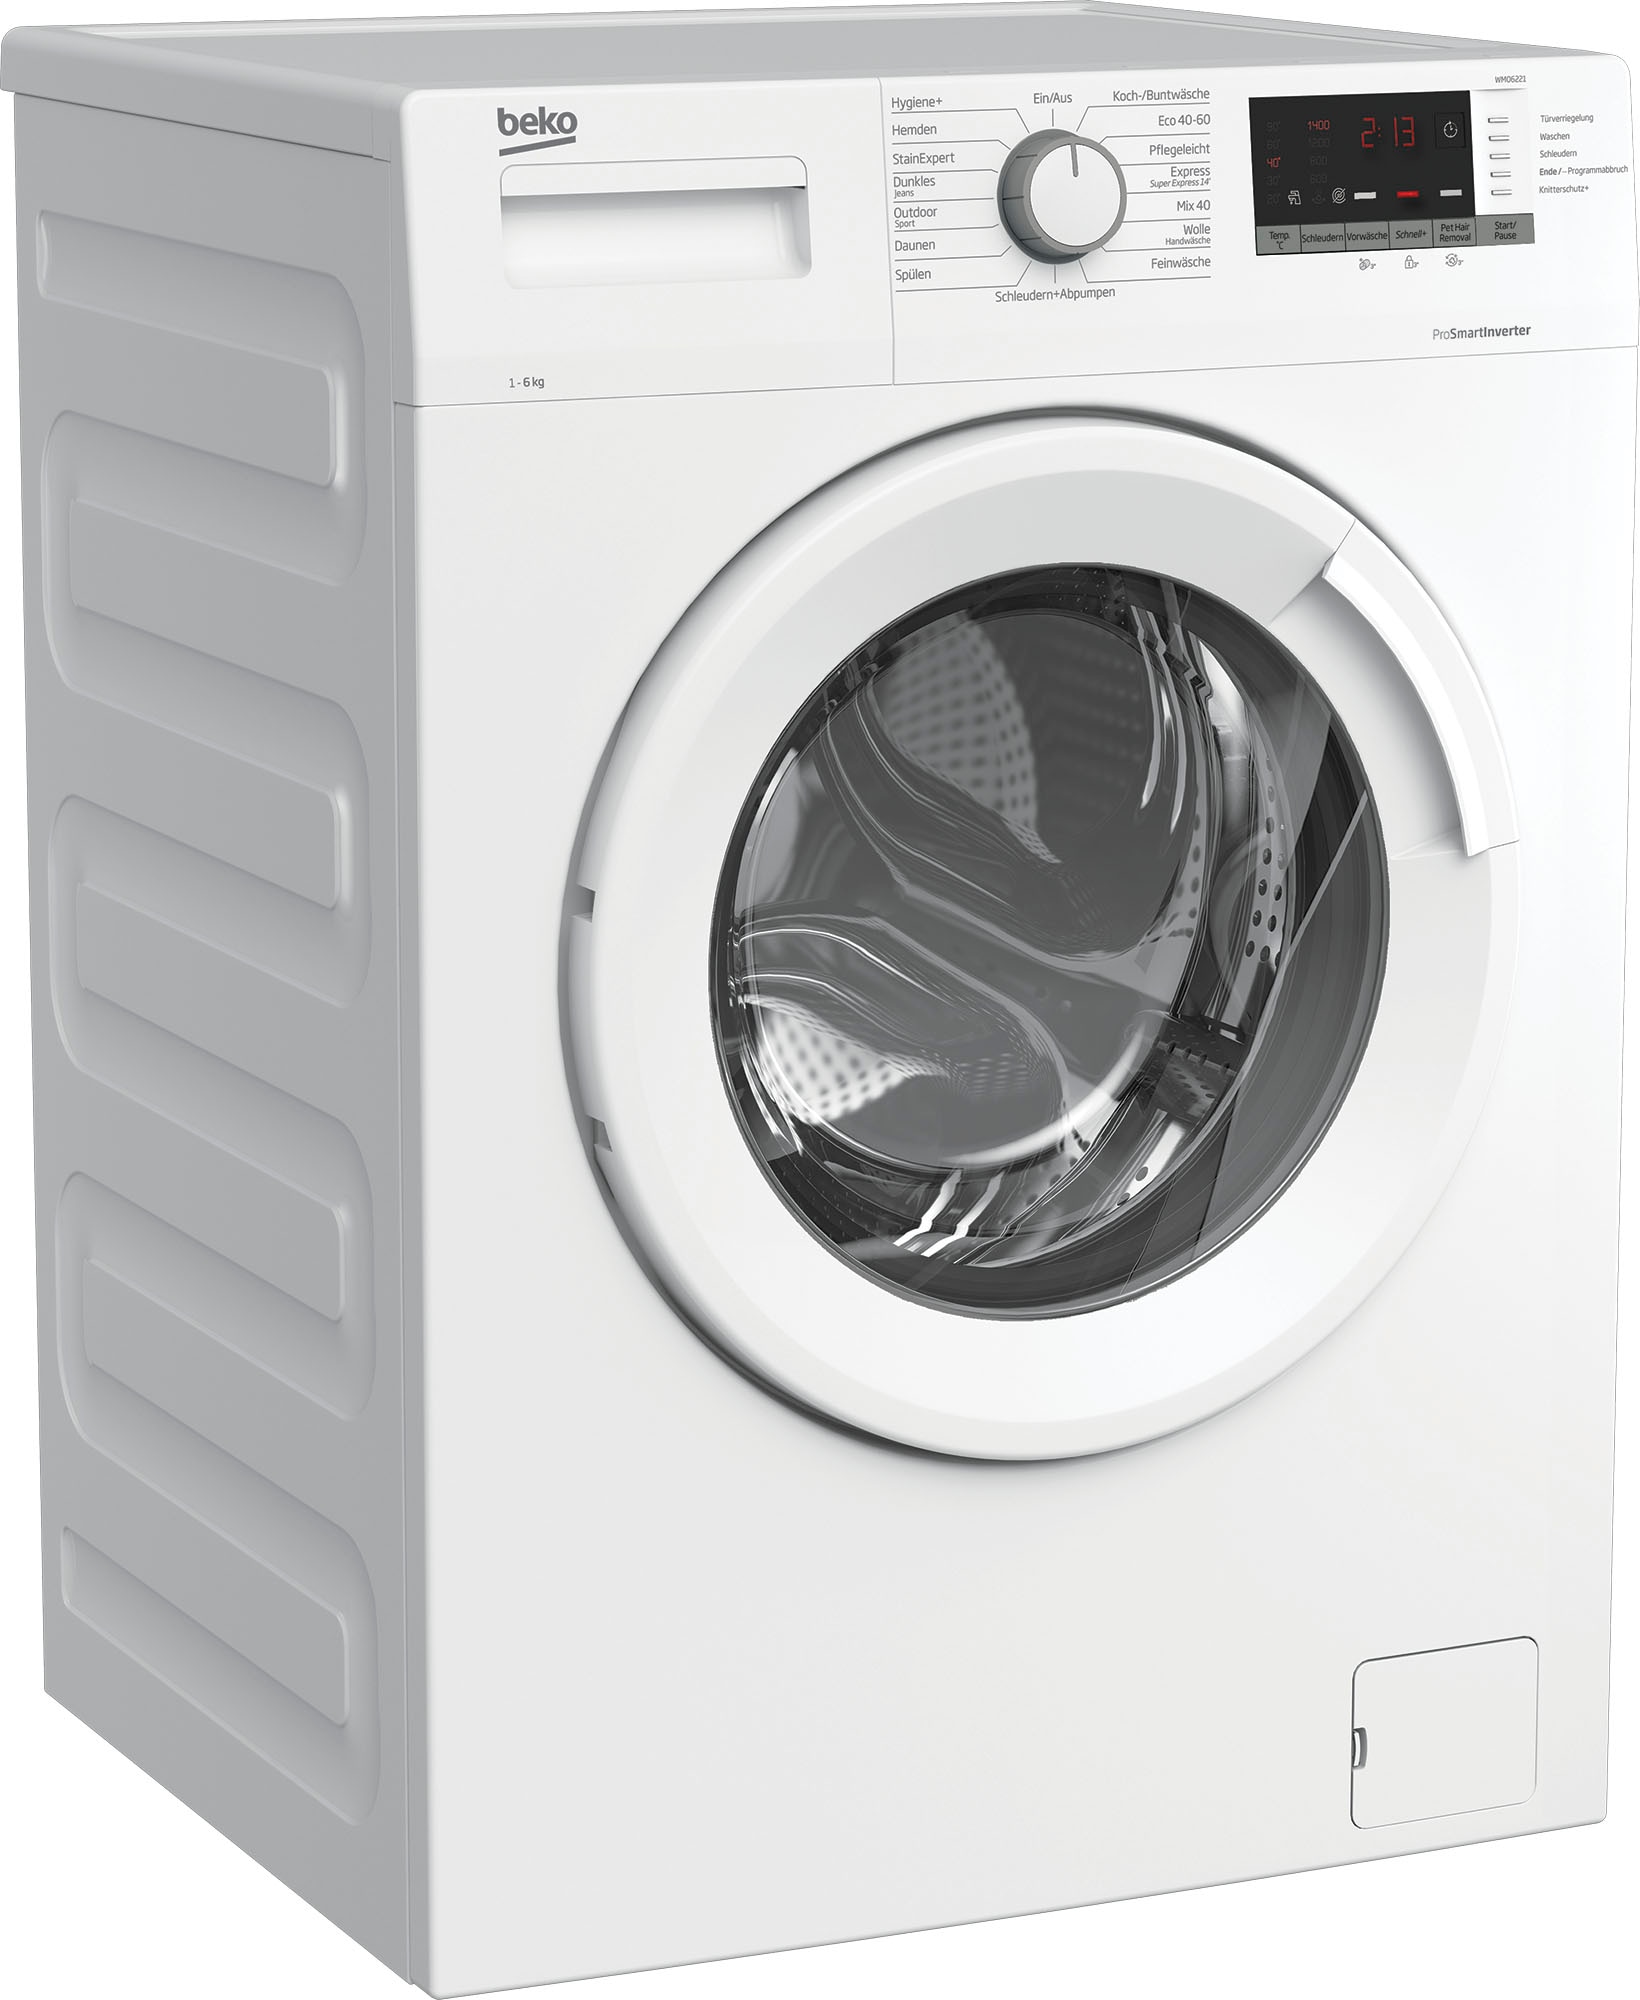 BEKO Waschmaschine »WMO6221«, WMO6221 Raten kg, kaufen auf 1400 6 7146543700, U/min